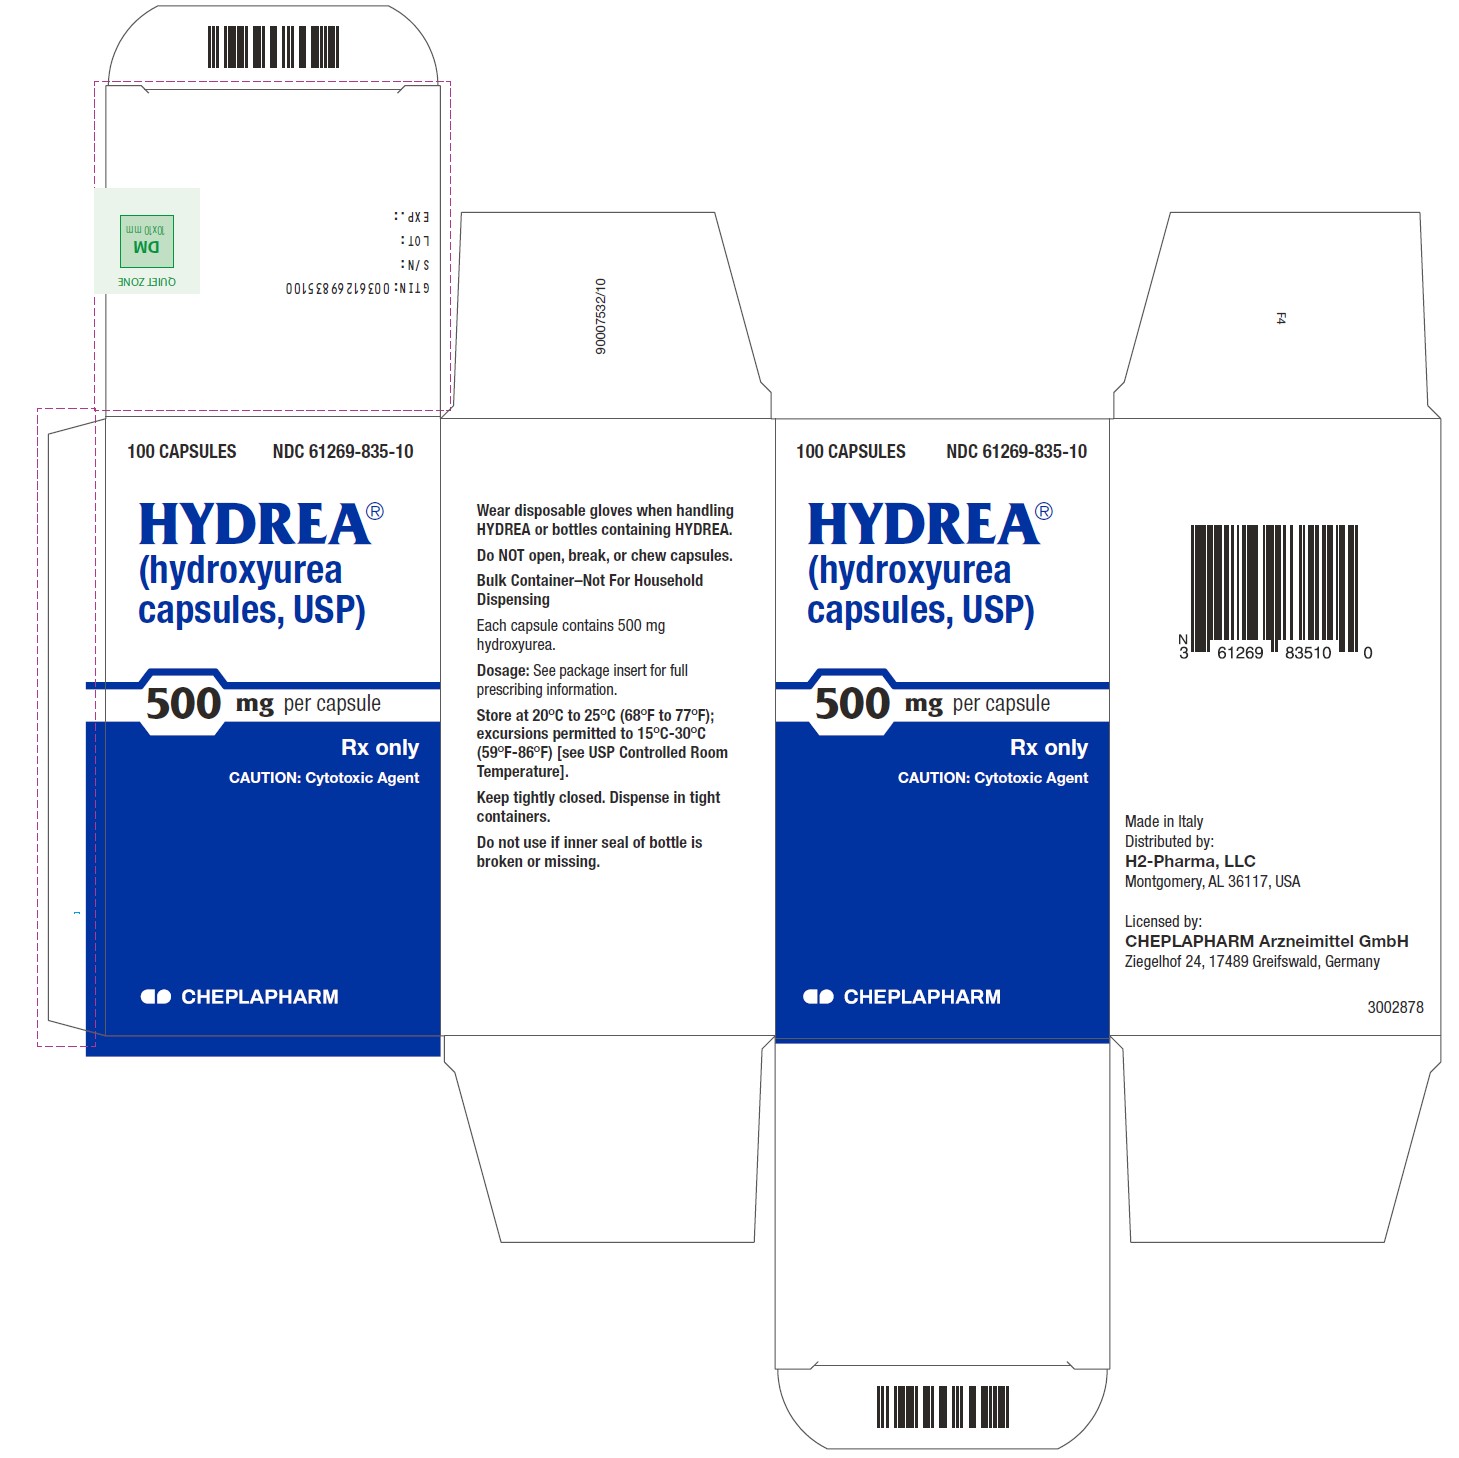 Hydrea 500 mg per capsule-carton